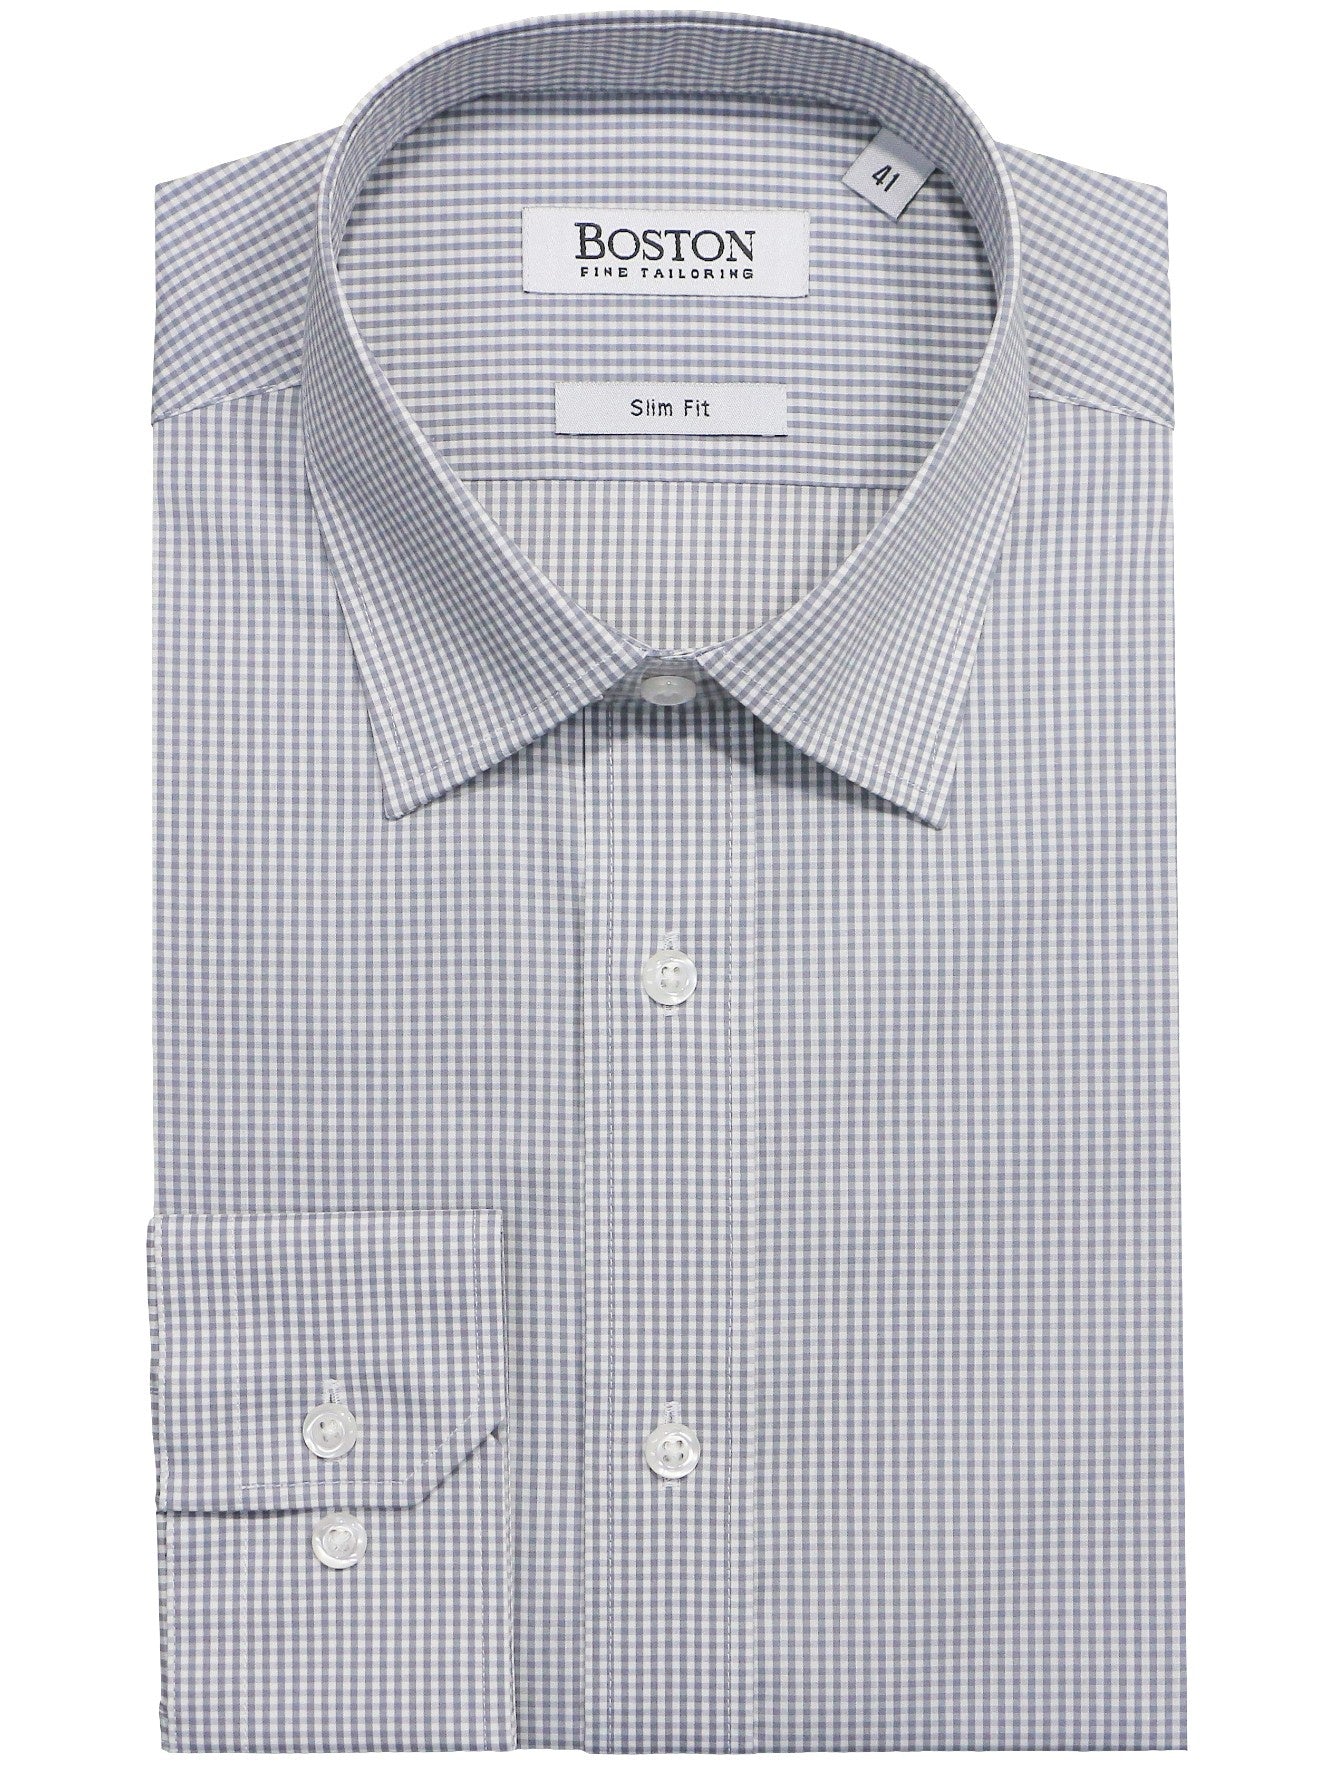 Boston BS555 Liberty Shirt - Thomson's Suits Ltd - Charcoal - 41 - 58461